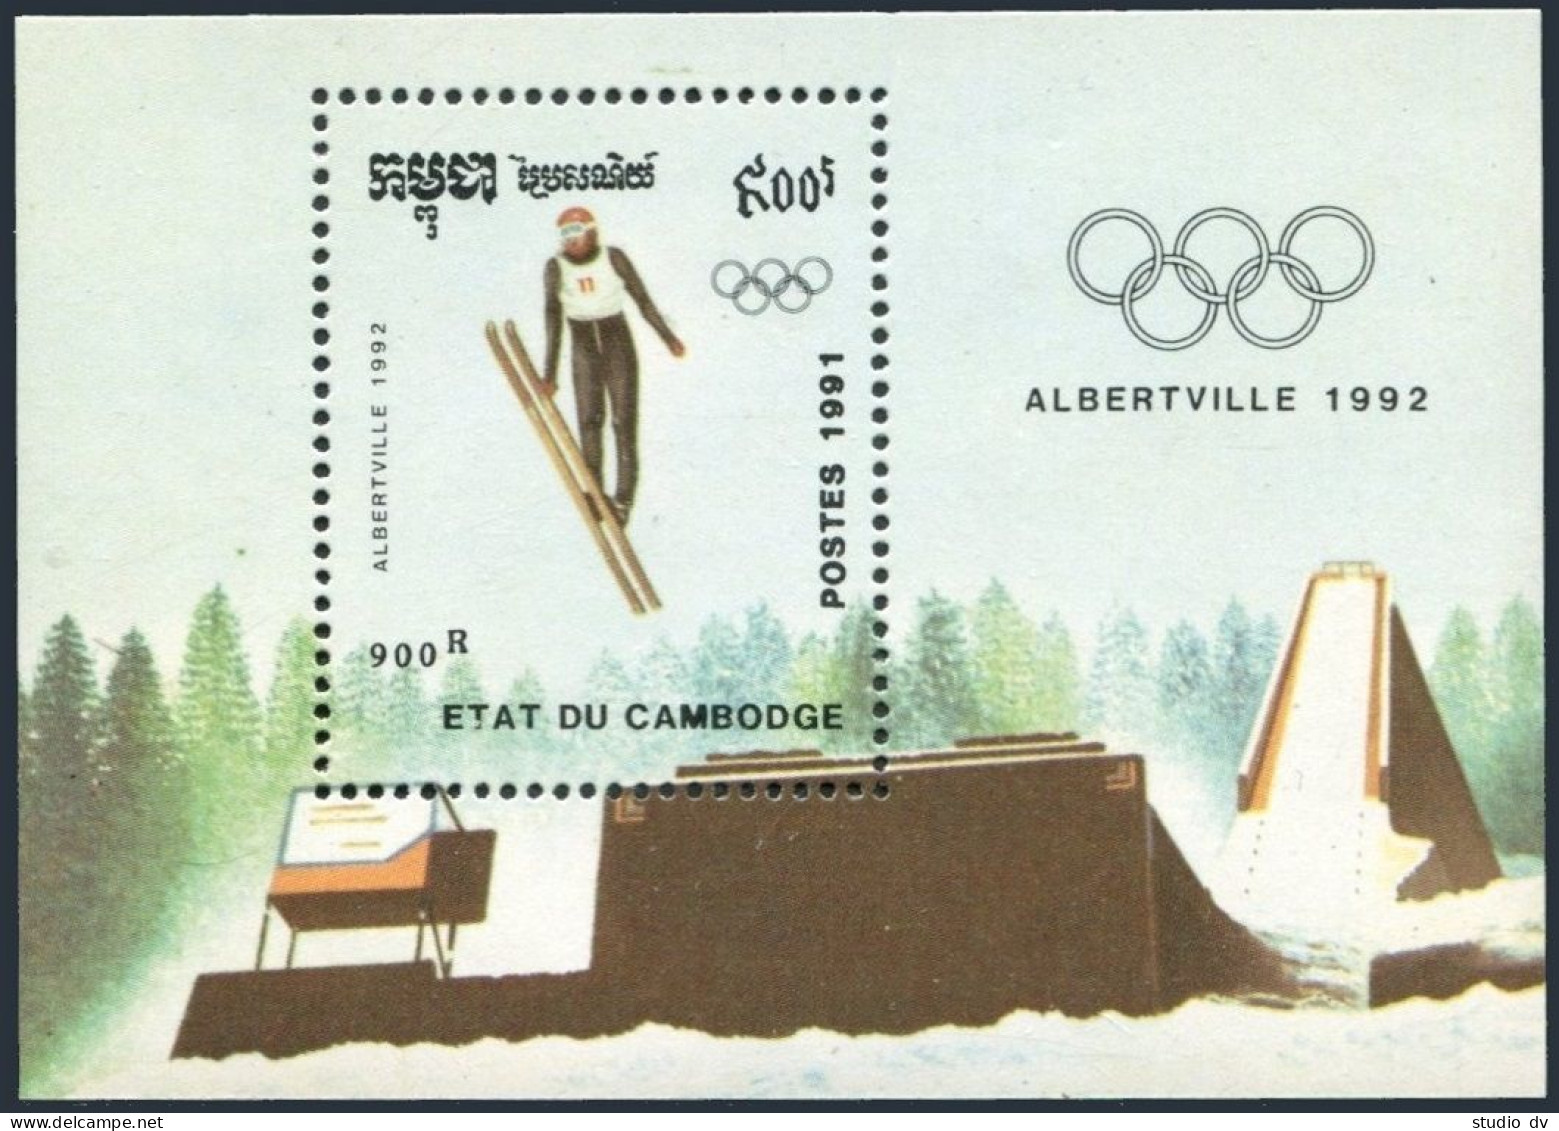 Cambodia 1126-1133,MNH.Michel 1204-1210,Bl.182. Olympics Albertville-1992.Hockey - Cambodge